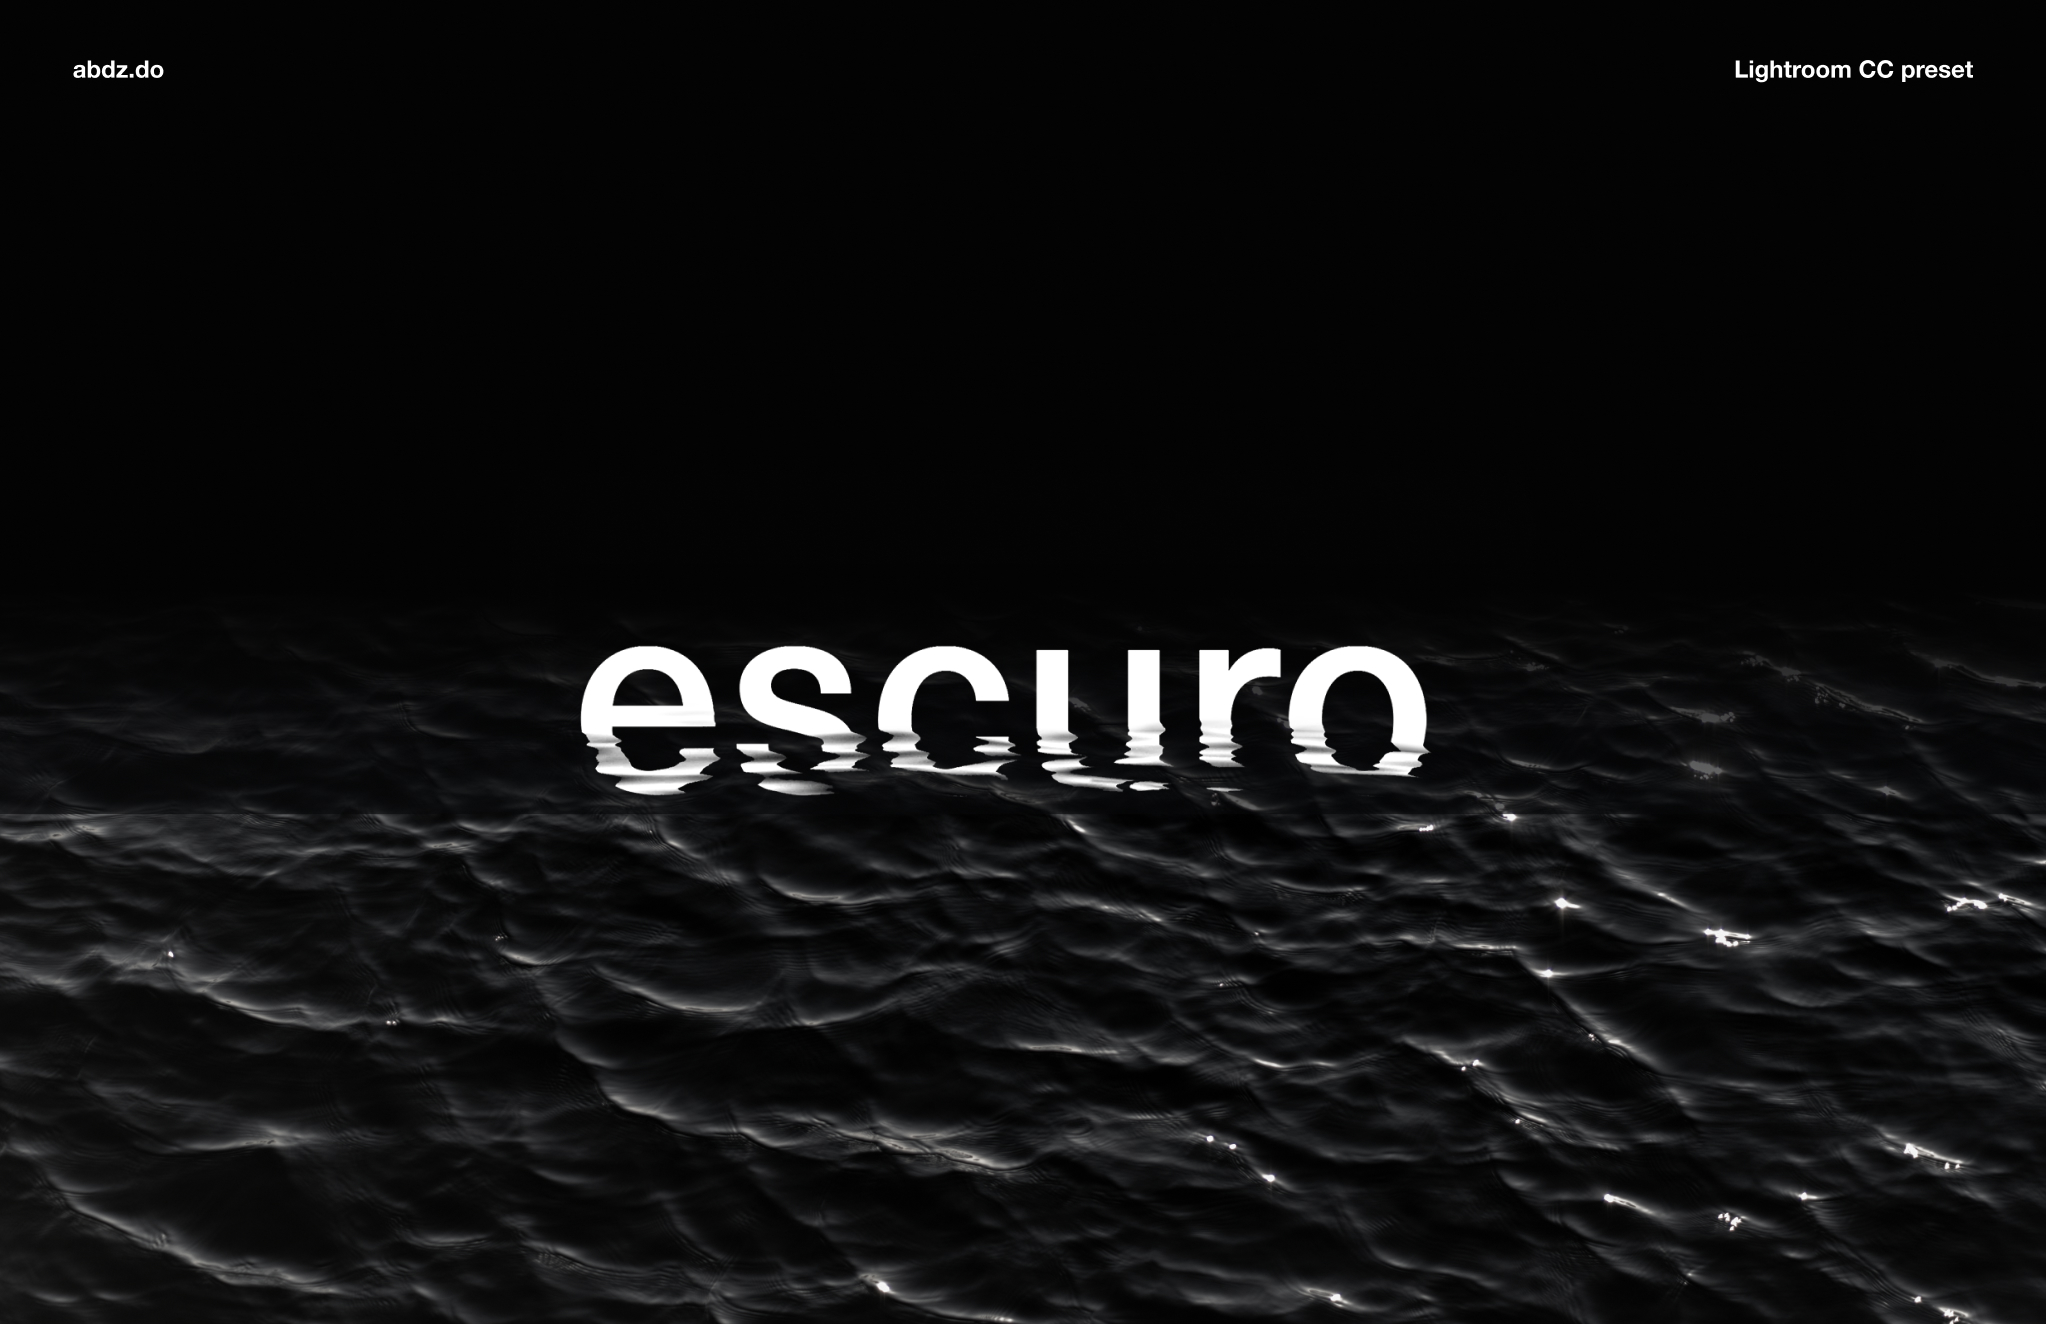 Profile Page screen design idea #183: Introducing Escuro Lightroom CC Preset